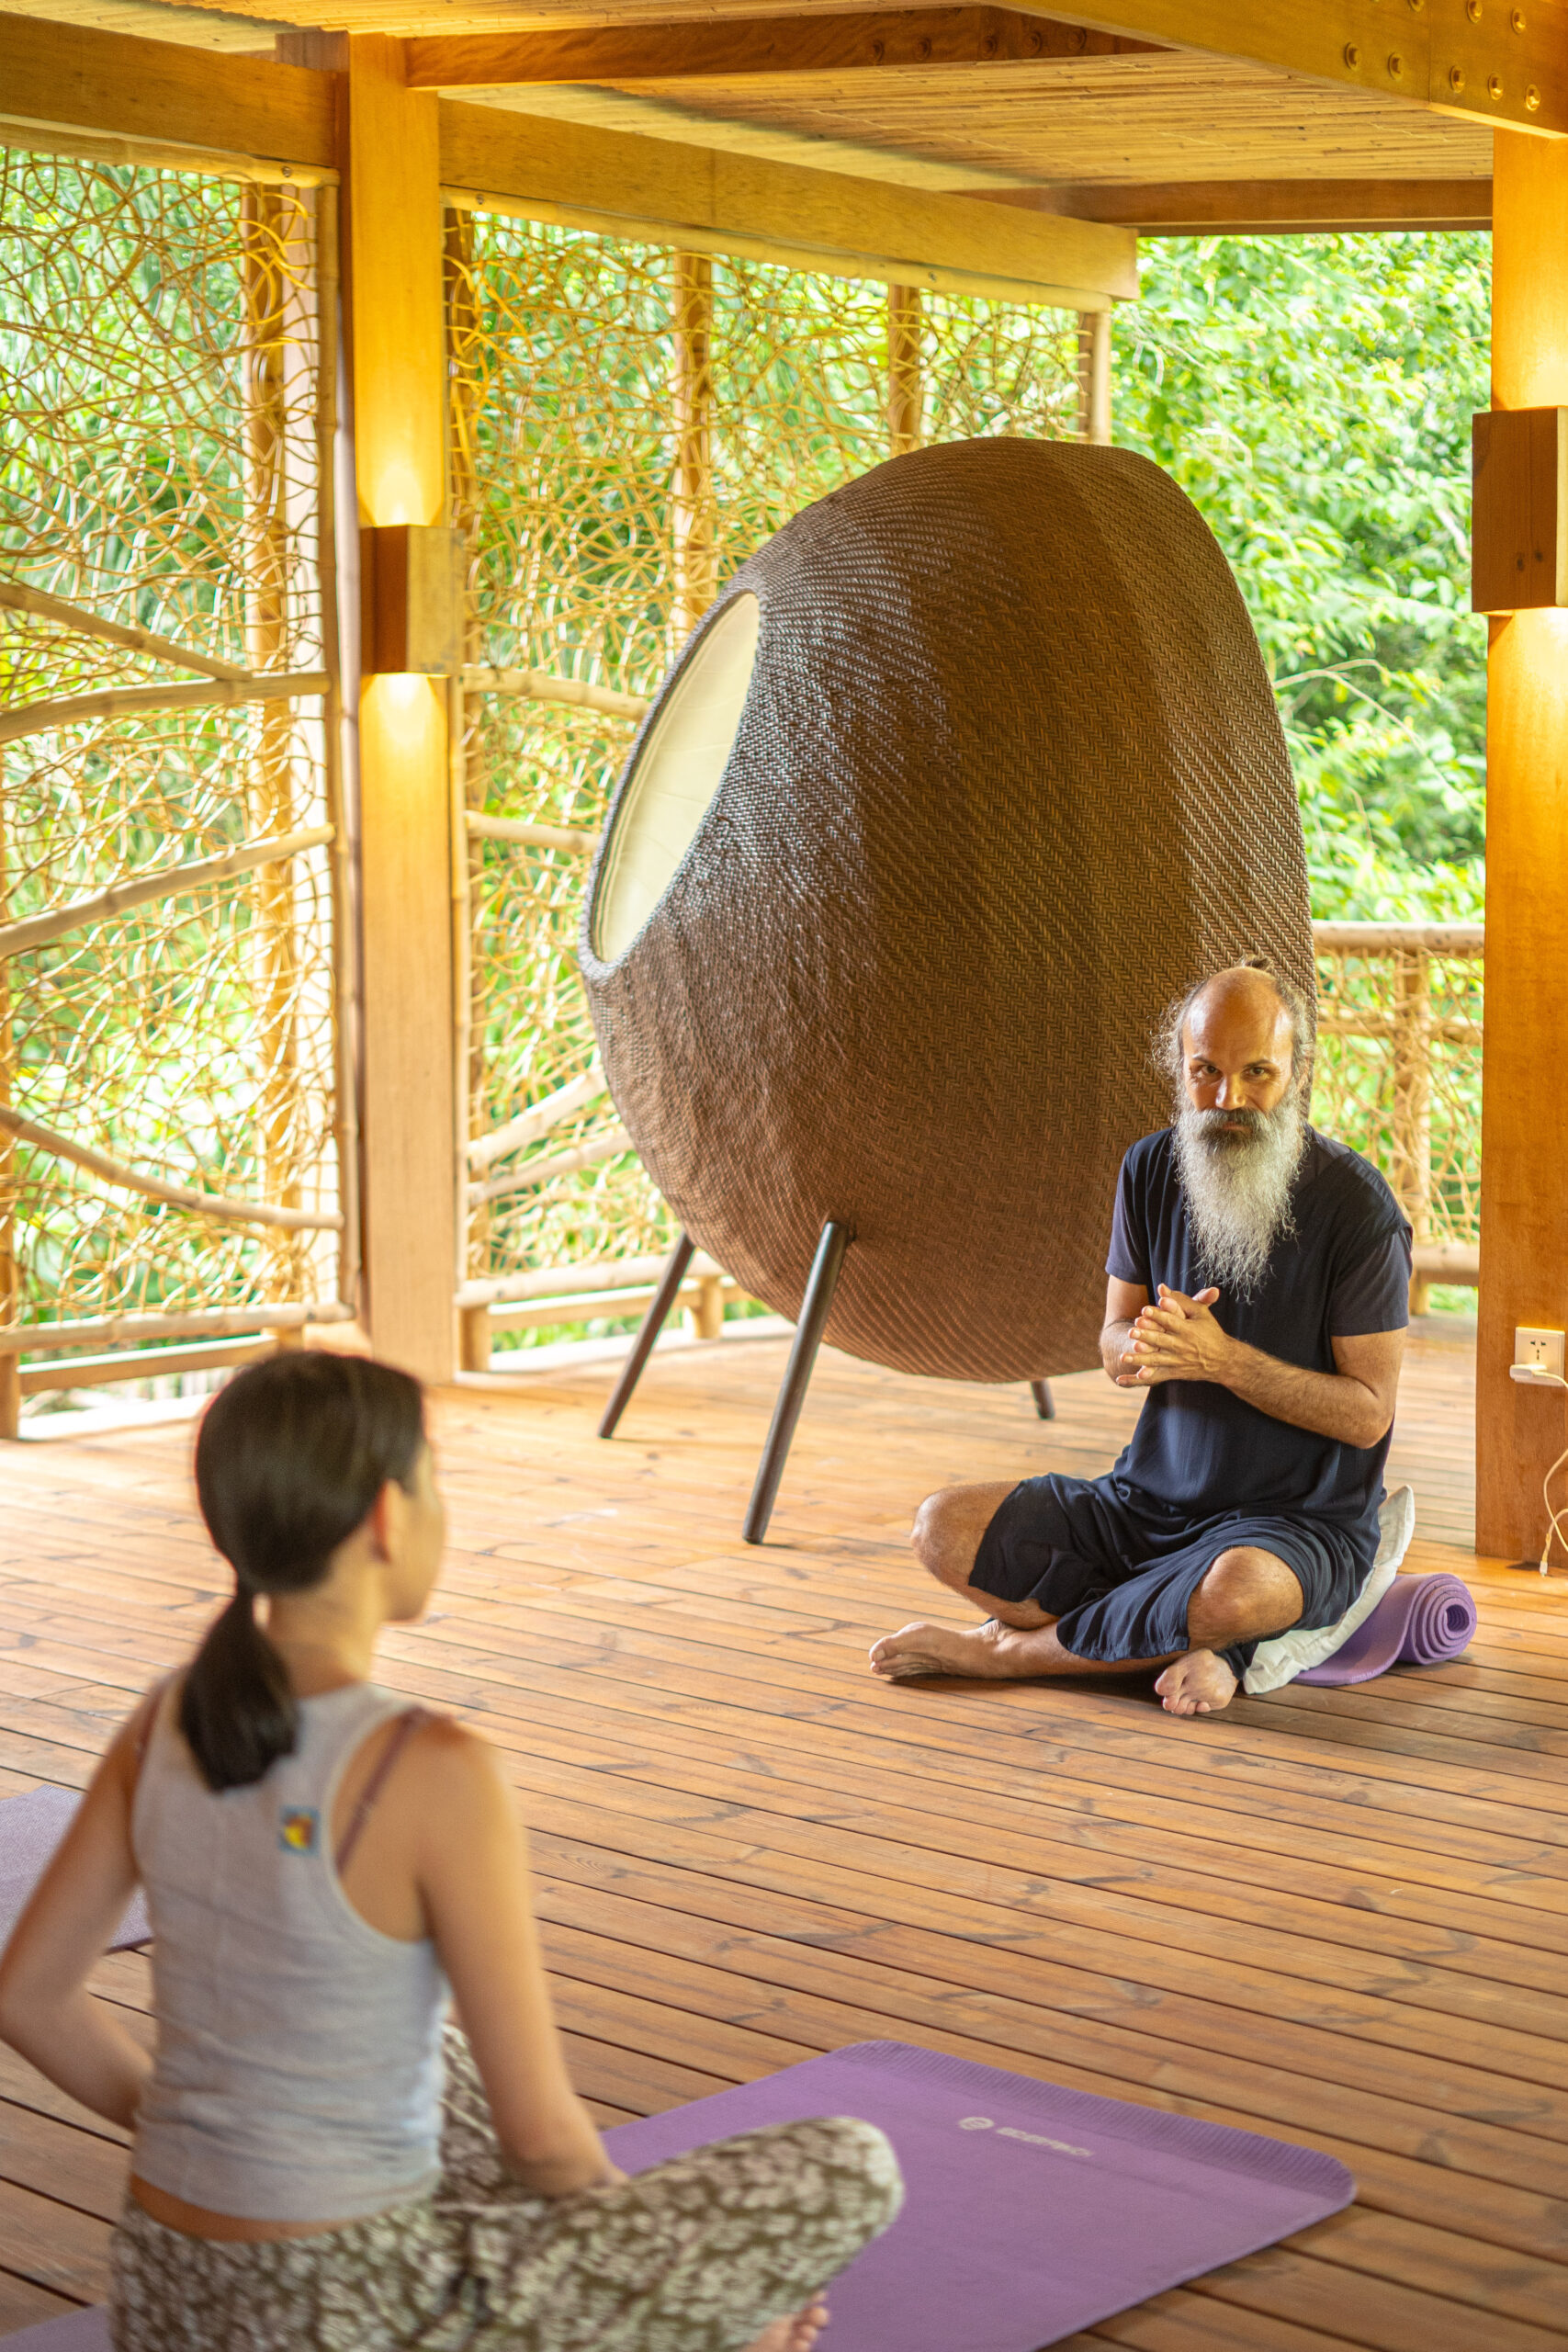 Samuel Boursier, an international Meditation and Breathwork facilitator, guides us through our routine | Photo courtesy of JT Fernandez